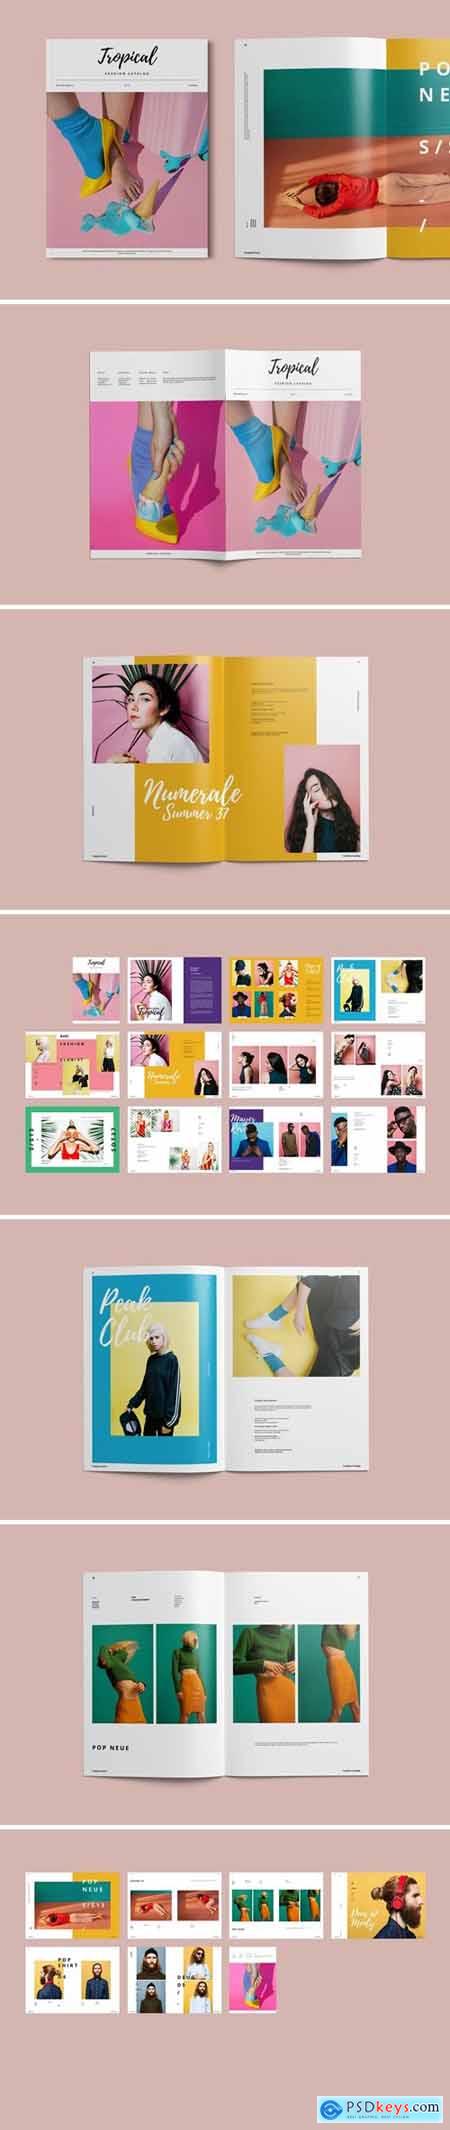 Fashion Catalog - Lookbook Brochure Template